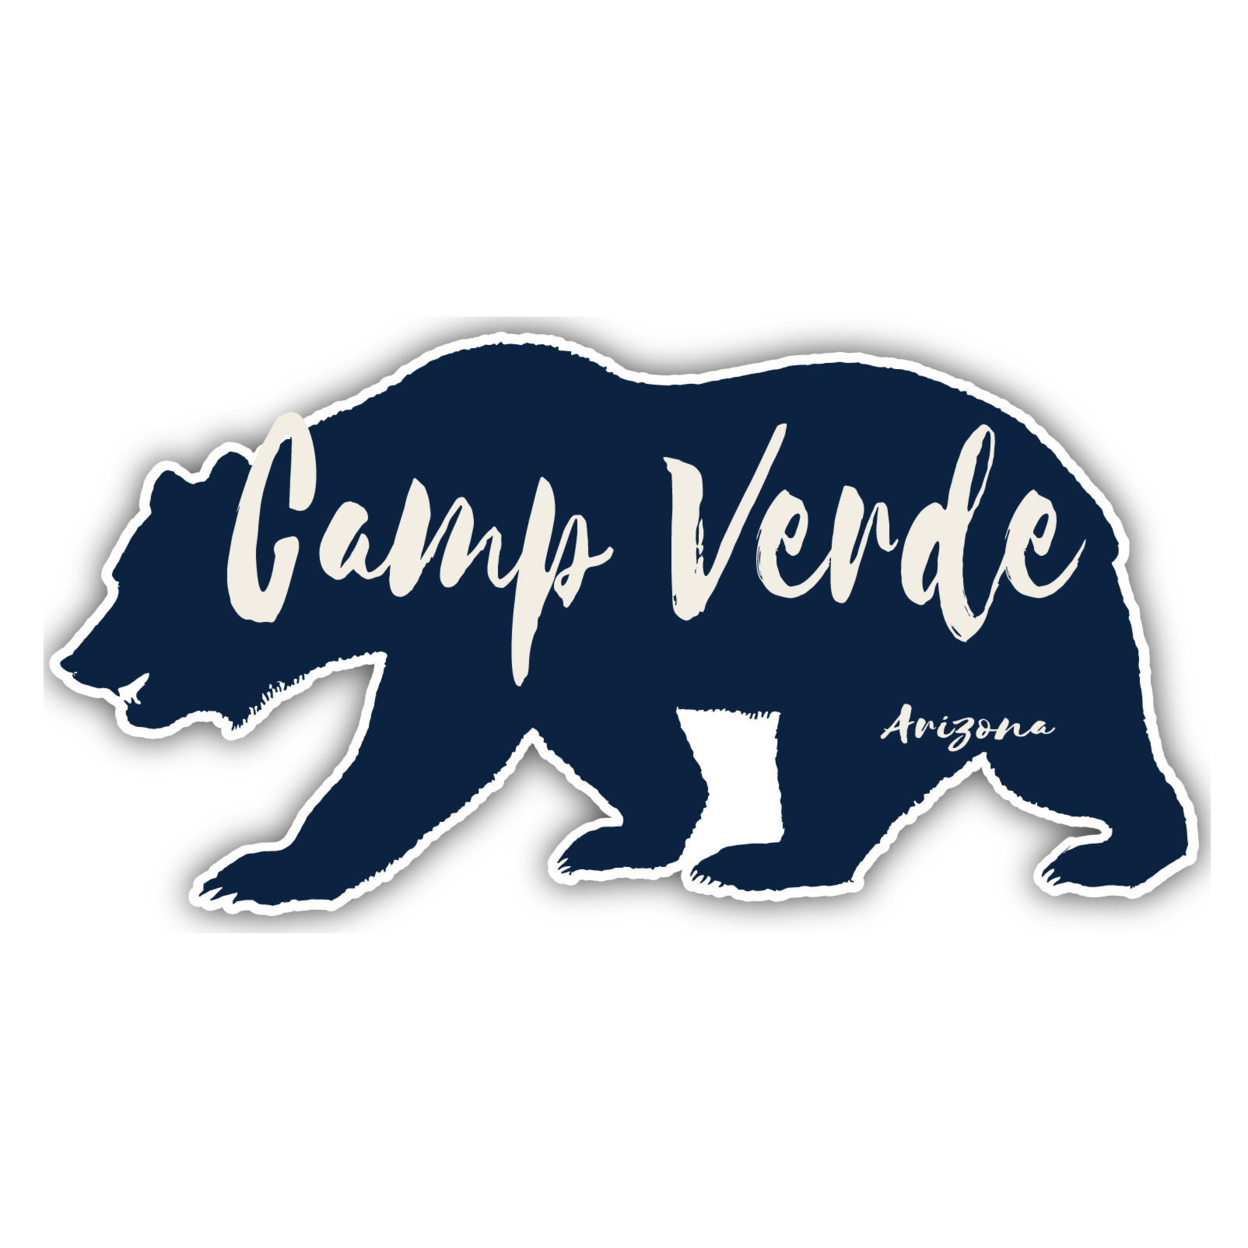 Camp Verde Arizona Souvenir Decorative Stickers (Choose Theme And Size) - 4-Pack, 8-Inch, Camp Life